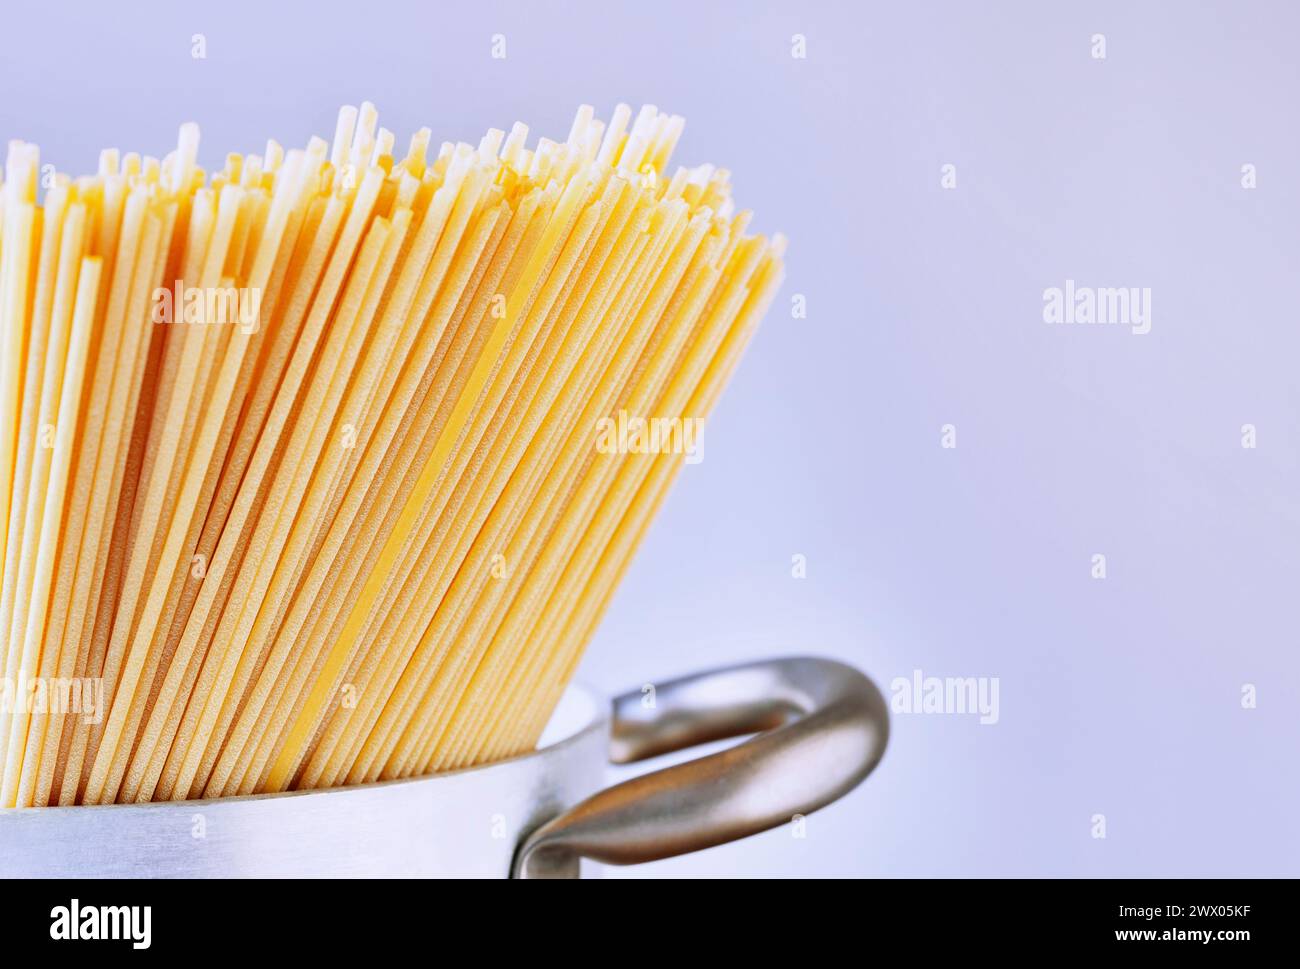 Espaguetis de pasta seca en sartén, preparación de comida, comida italiana tradicional Foto de stock